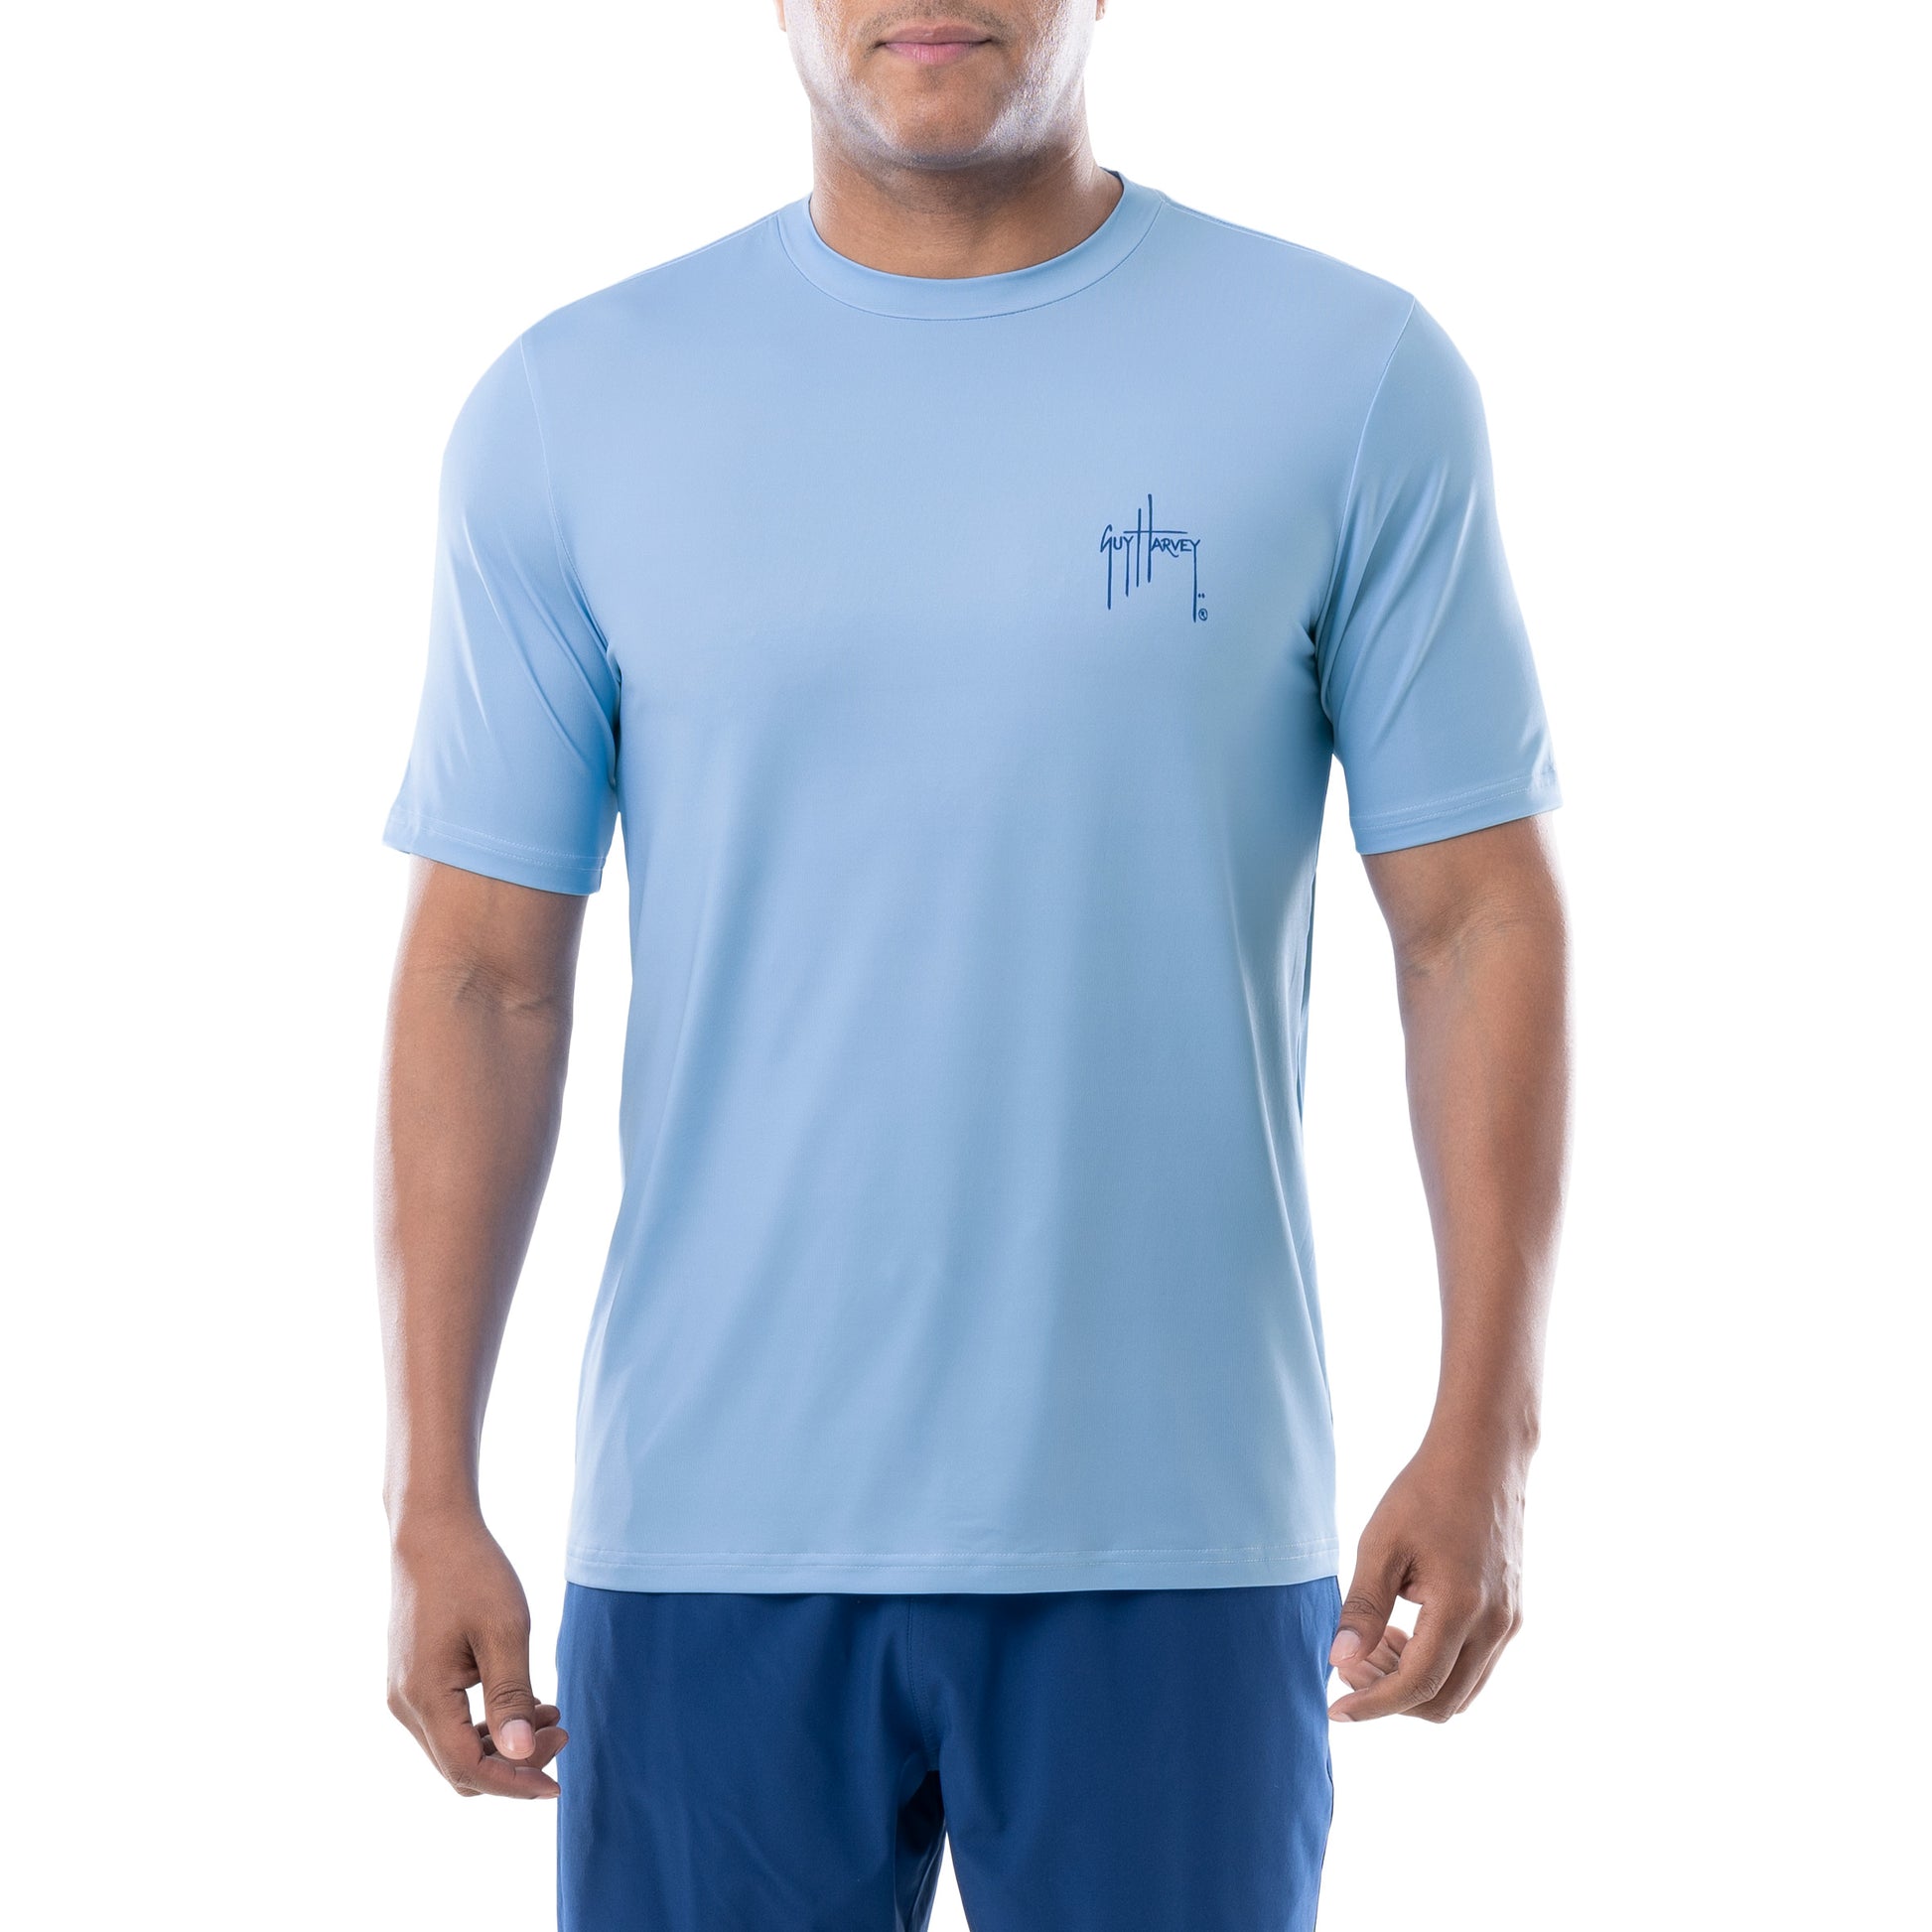 Men's Classic Blue Marlin Short Sleeve Performance Shirt View 2